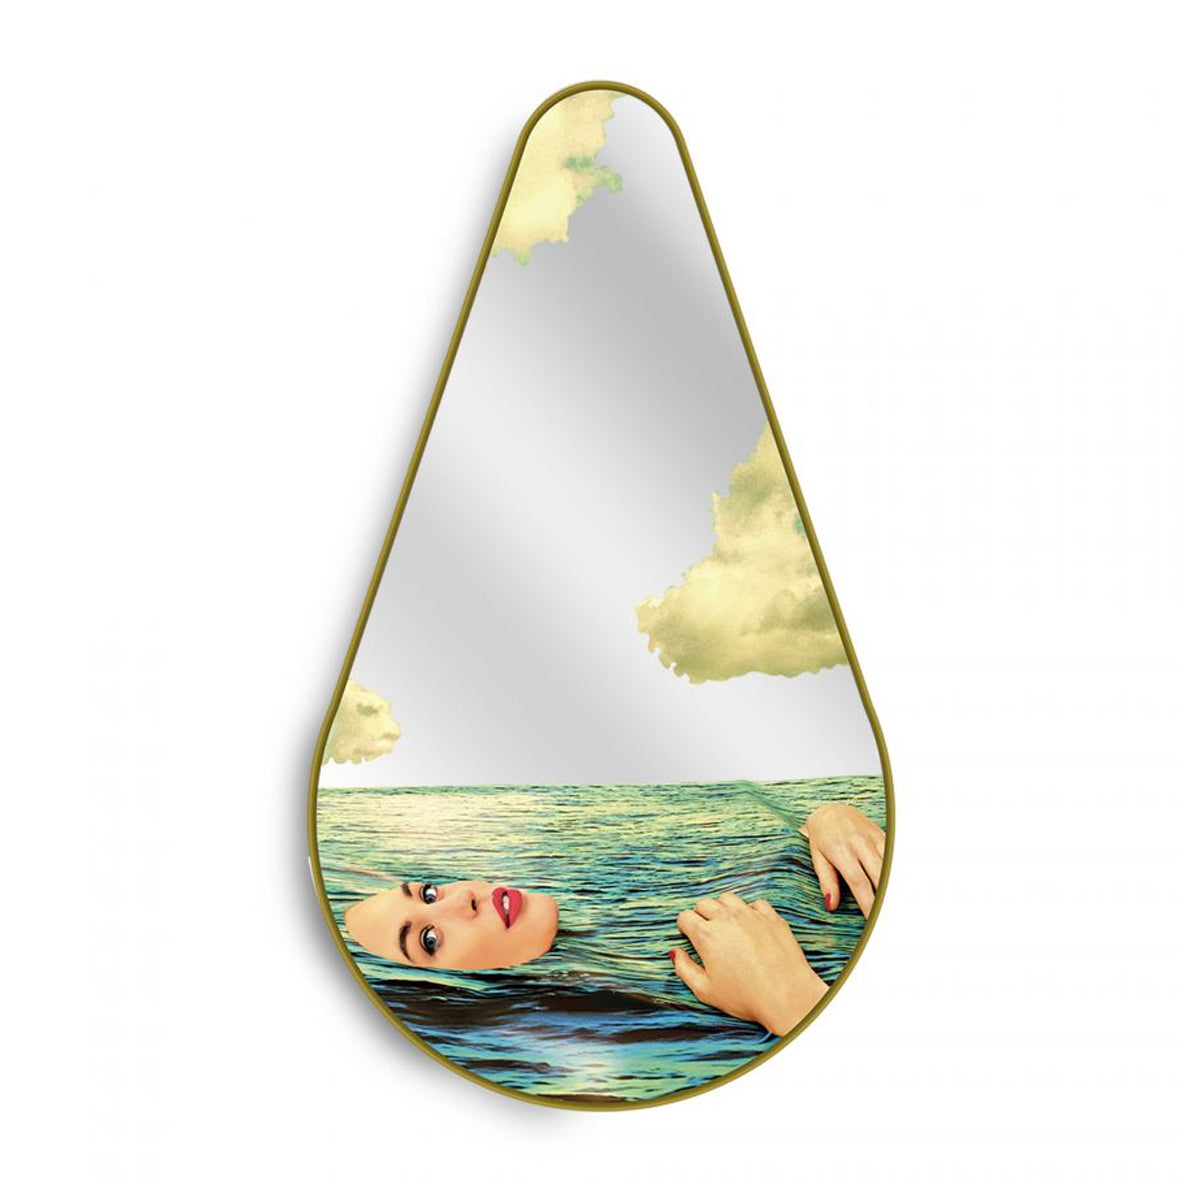 Seletti X Toiletpaper Gold Frame Pear Sea Girl Mirror